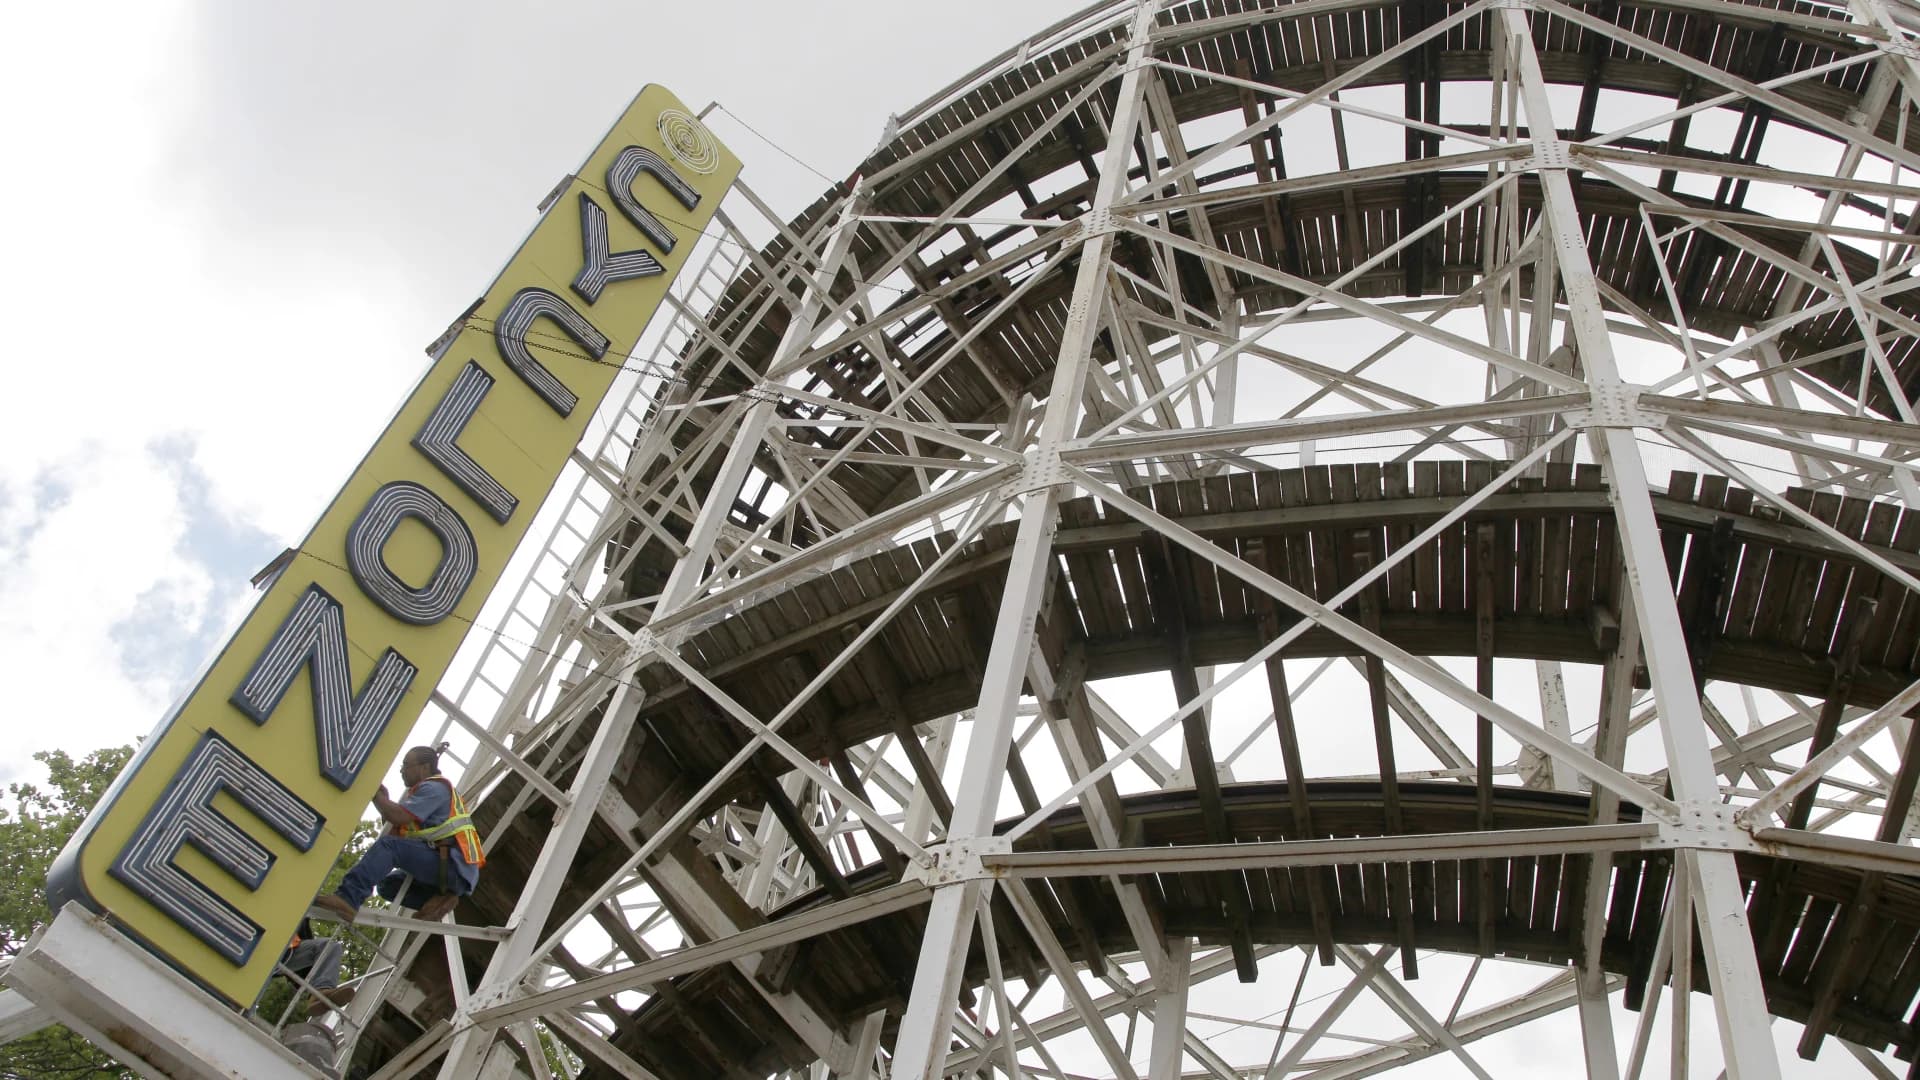 Coney Island’s Luna Park set to reopen April 9